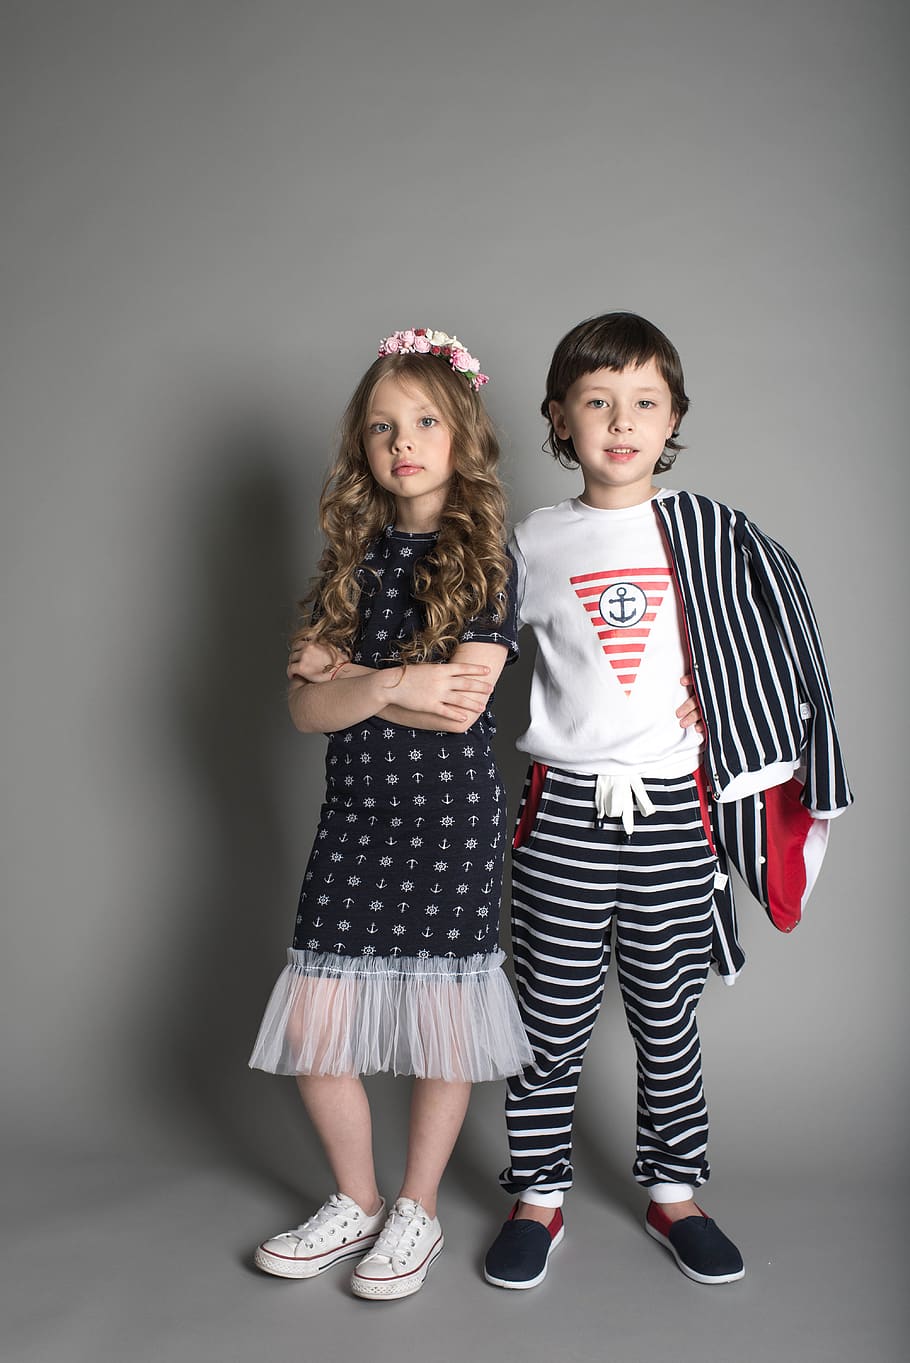 HD wallpaper: Boy and Girl Standing in Studio In Front of Grey Background,  children | Wallpaper Flare